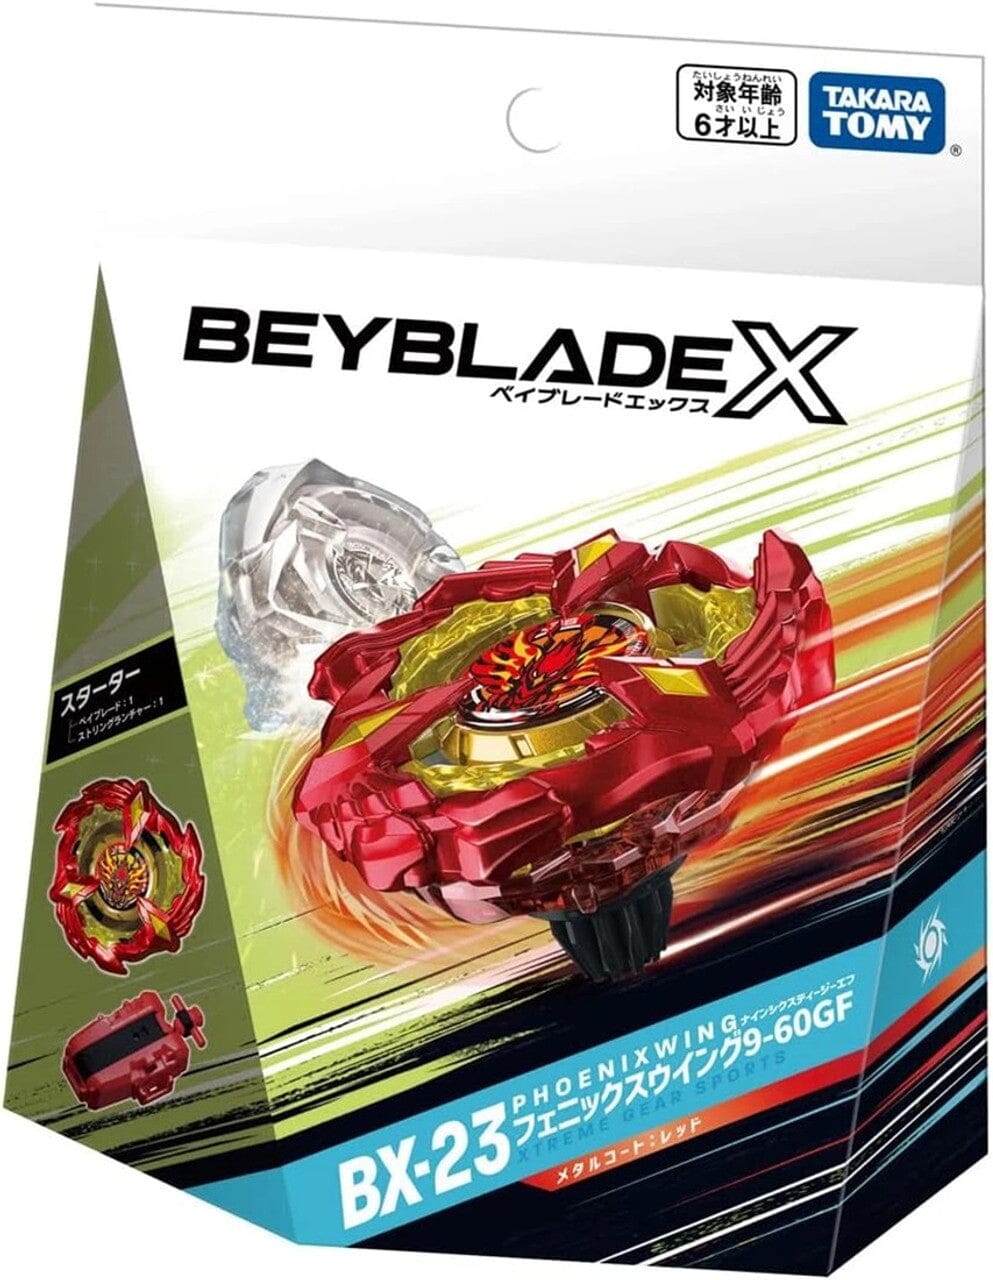 [PRE-ORDER Jan 12] Beyblade X BX-23 Starter Phoenix Wing 9-60GF BGL Hobbies